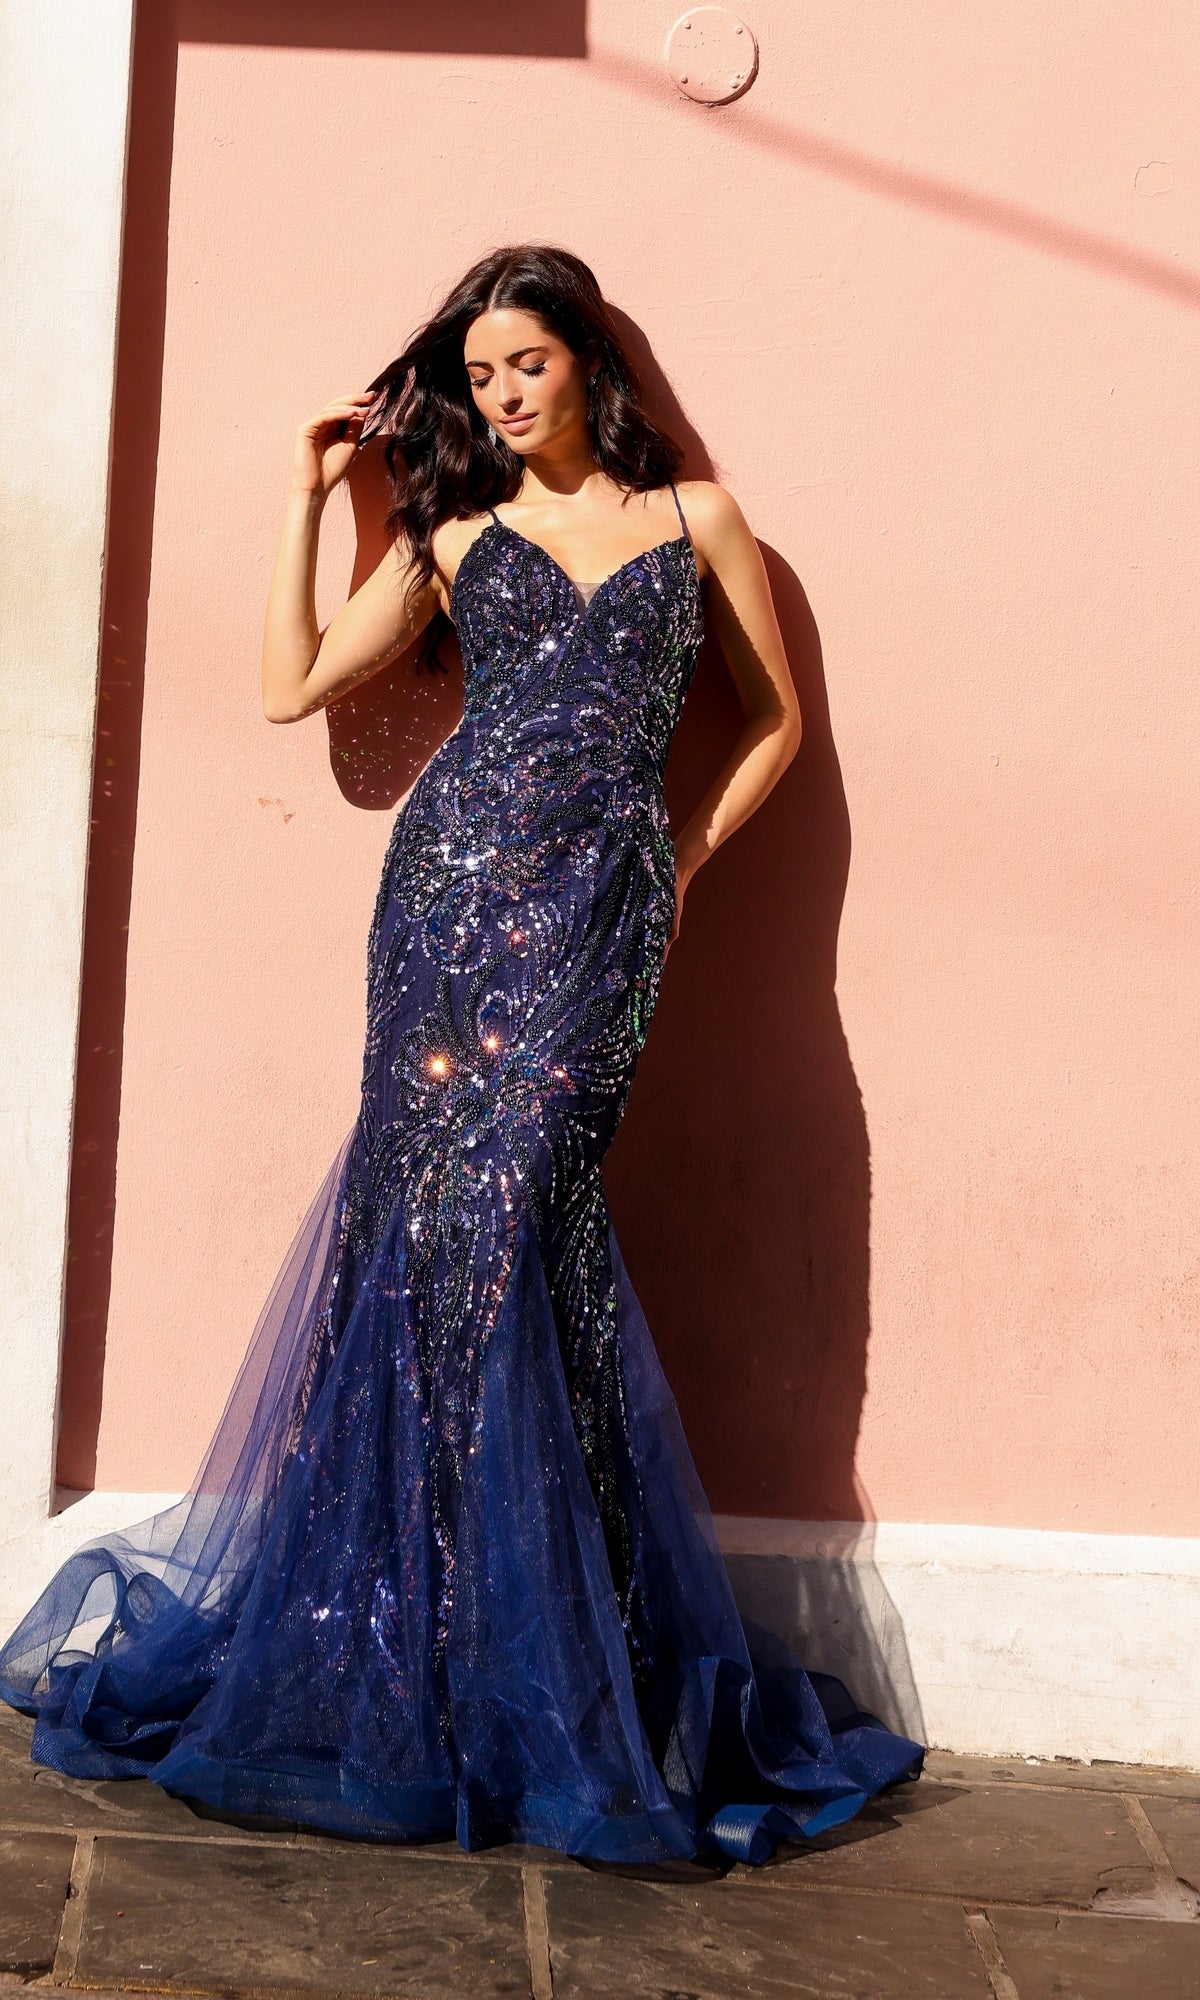 Nox Anabel Tight Sequin Mermaid Prom Dress C1416